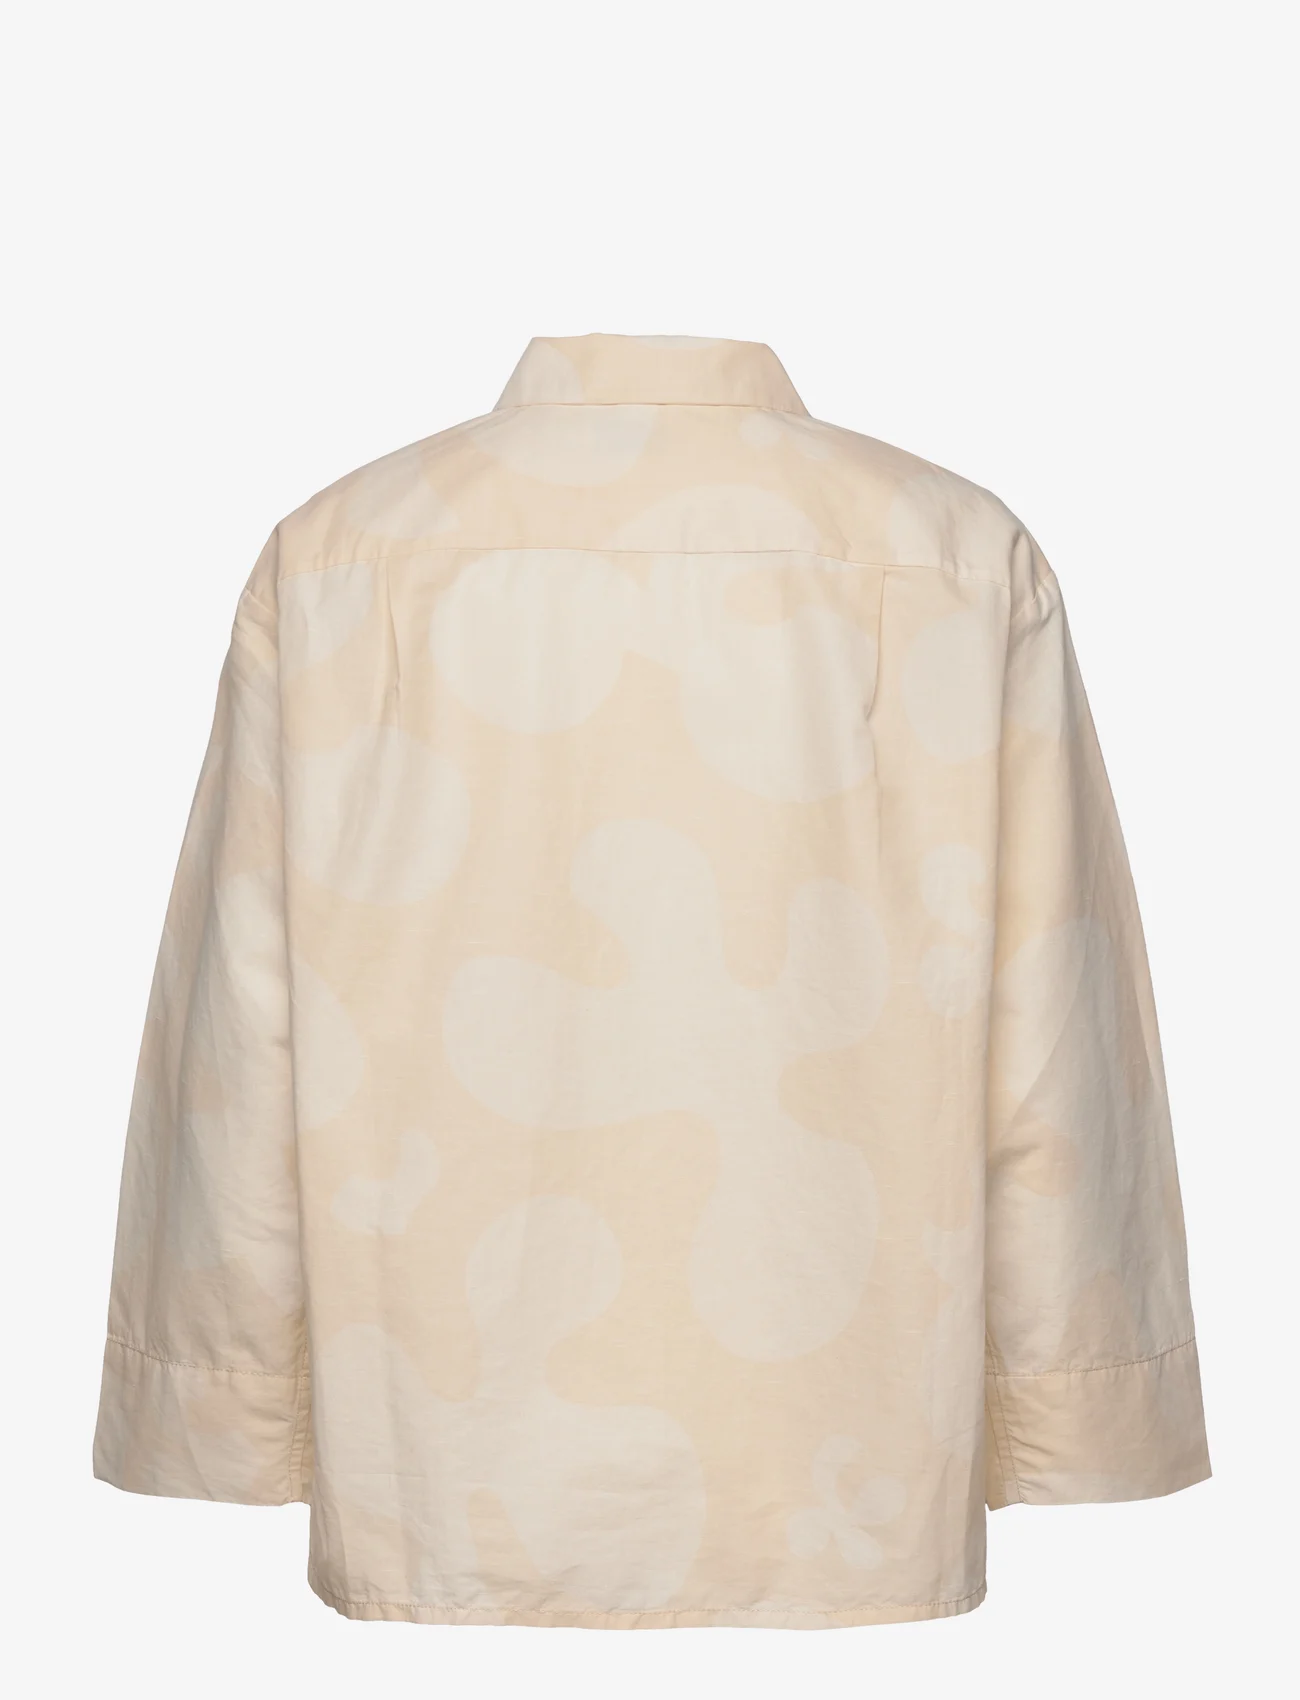 Marimekko - HILBA PULLOPOSTI - langærmede skjorter - sand, off-white - 1